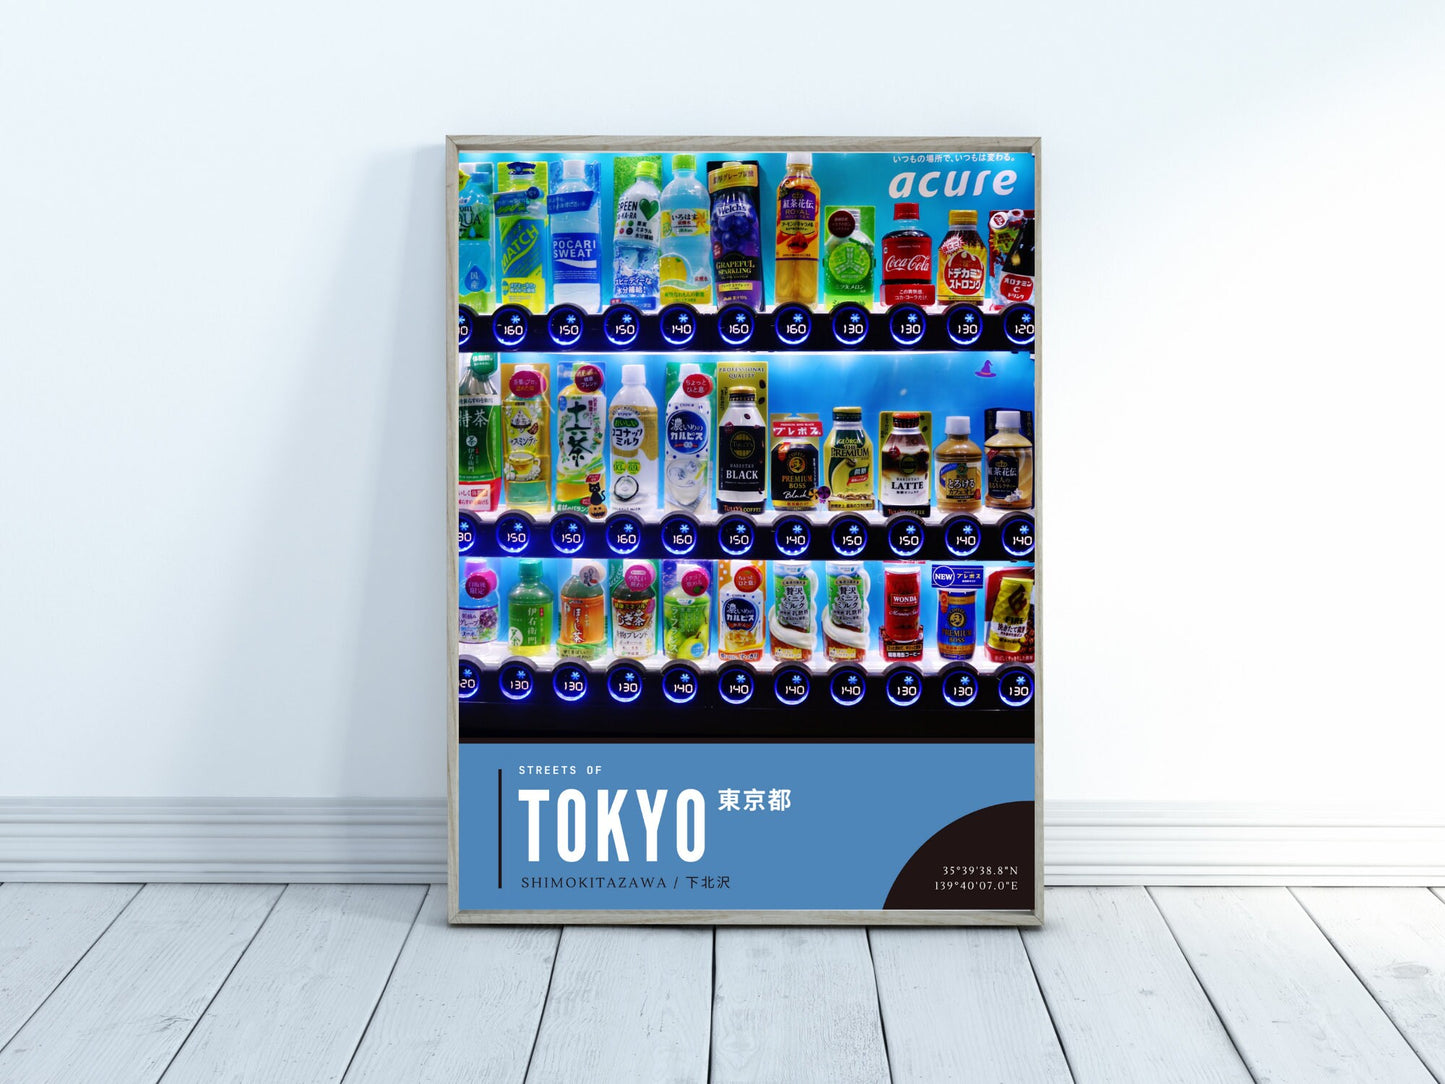 Tokyo Street Photography, Shimokitazawa Drink Machine